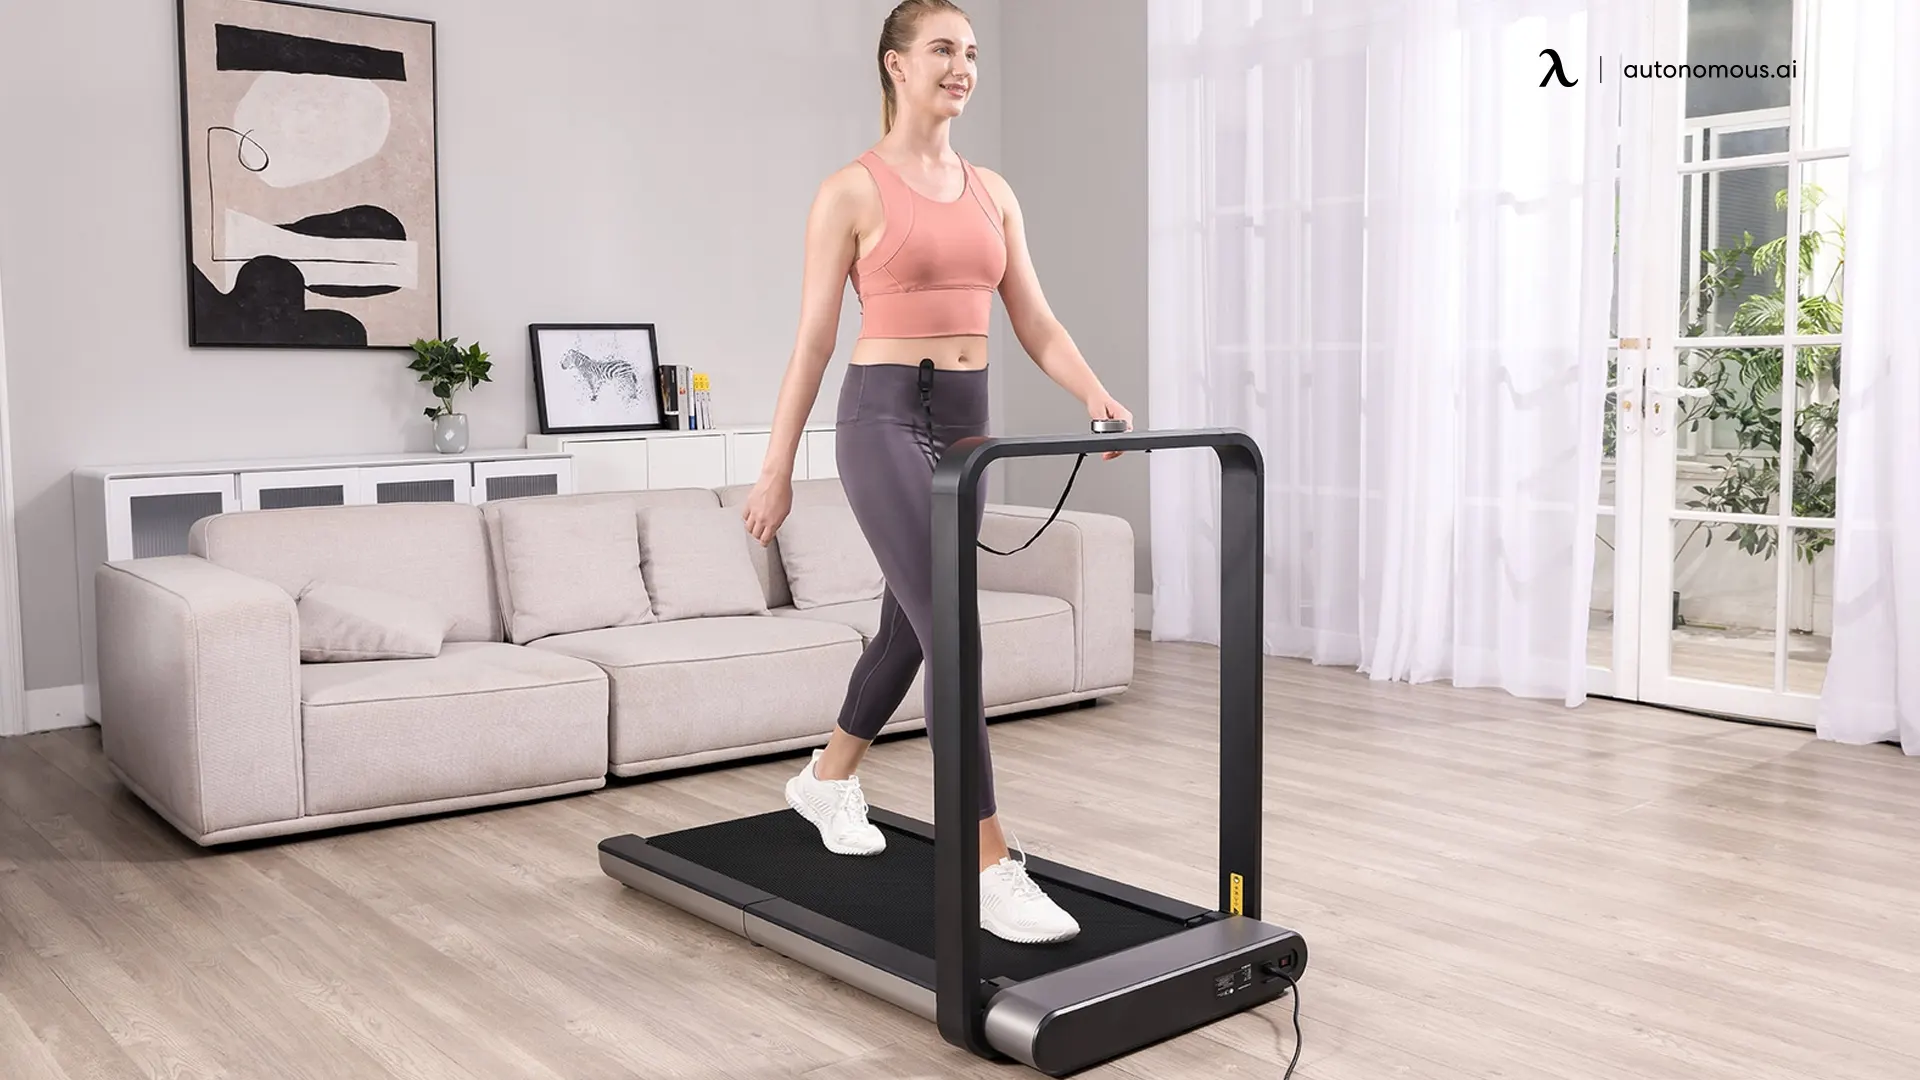 Use a Treadmill to Walk on a Spot